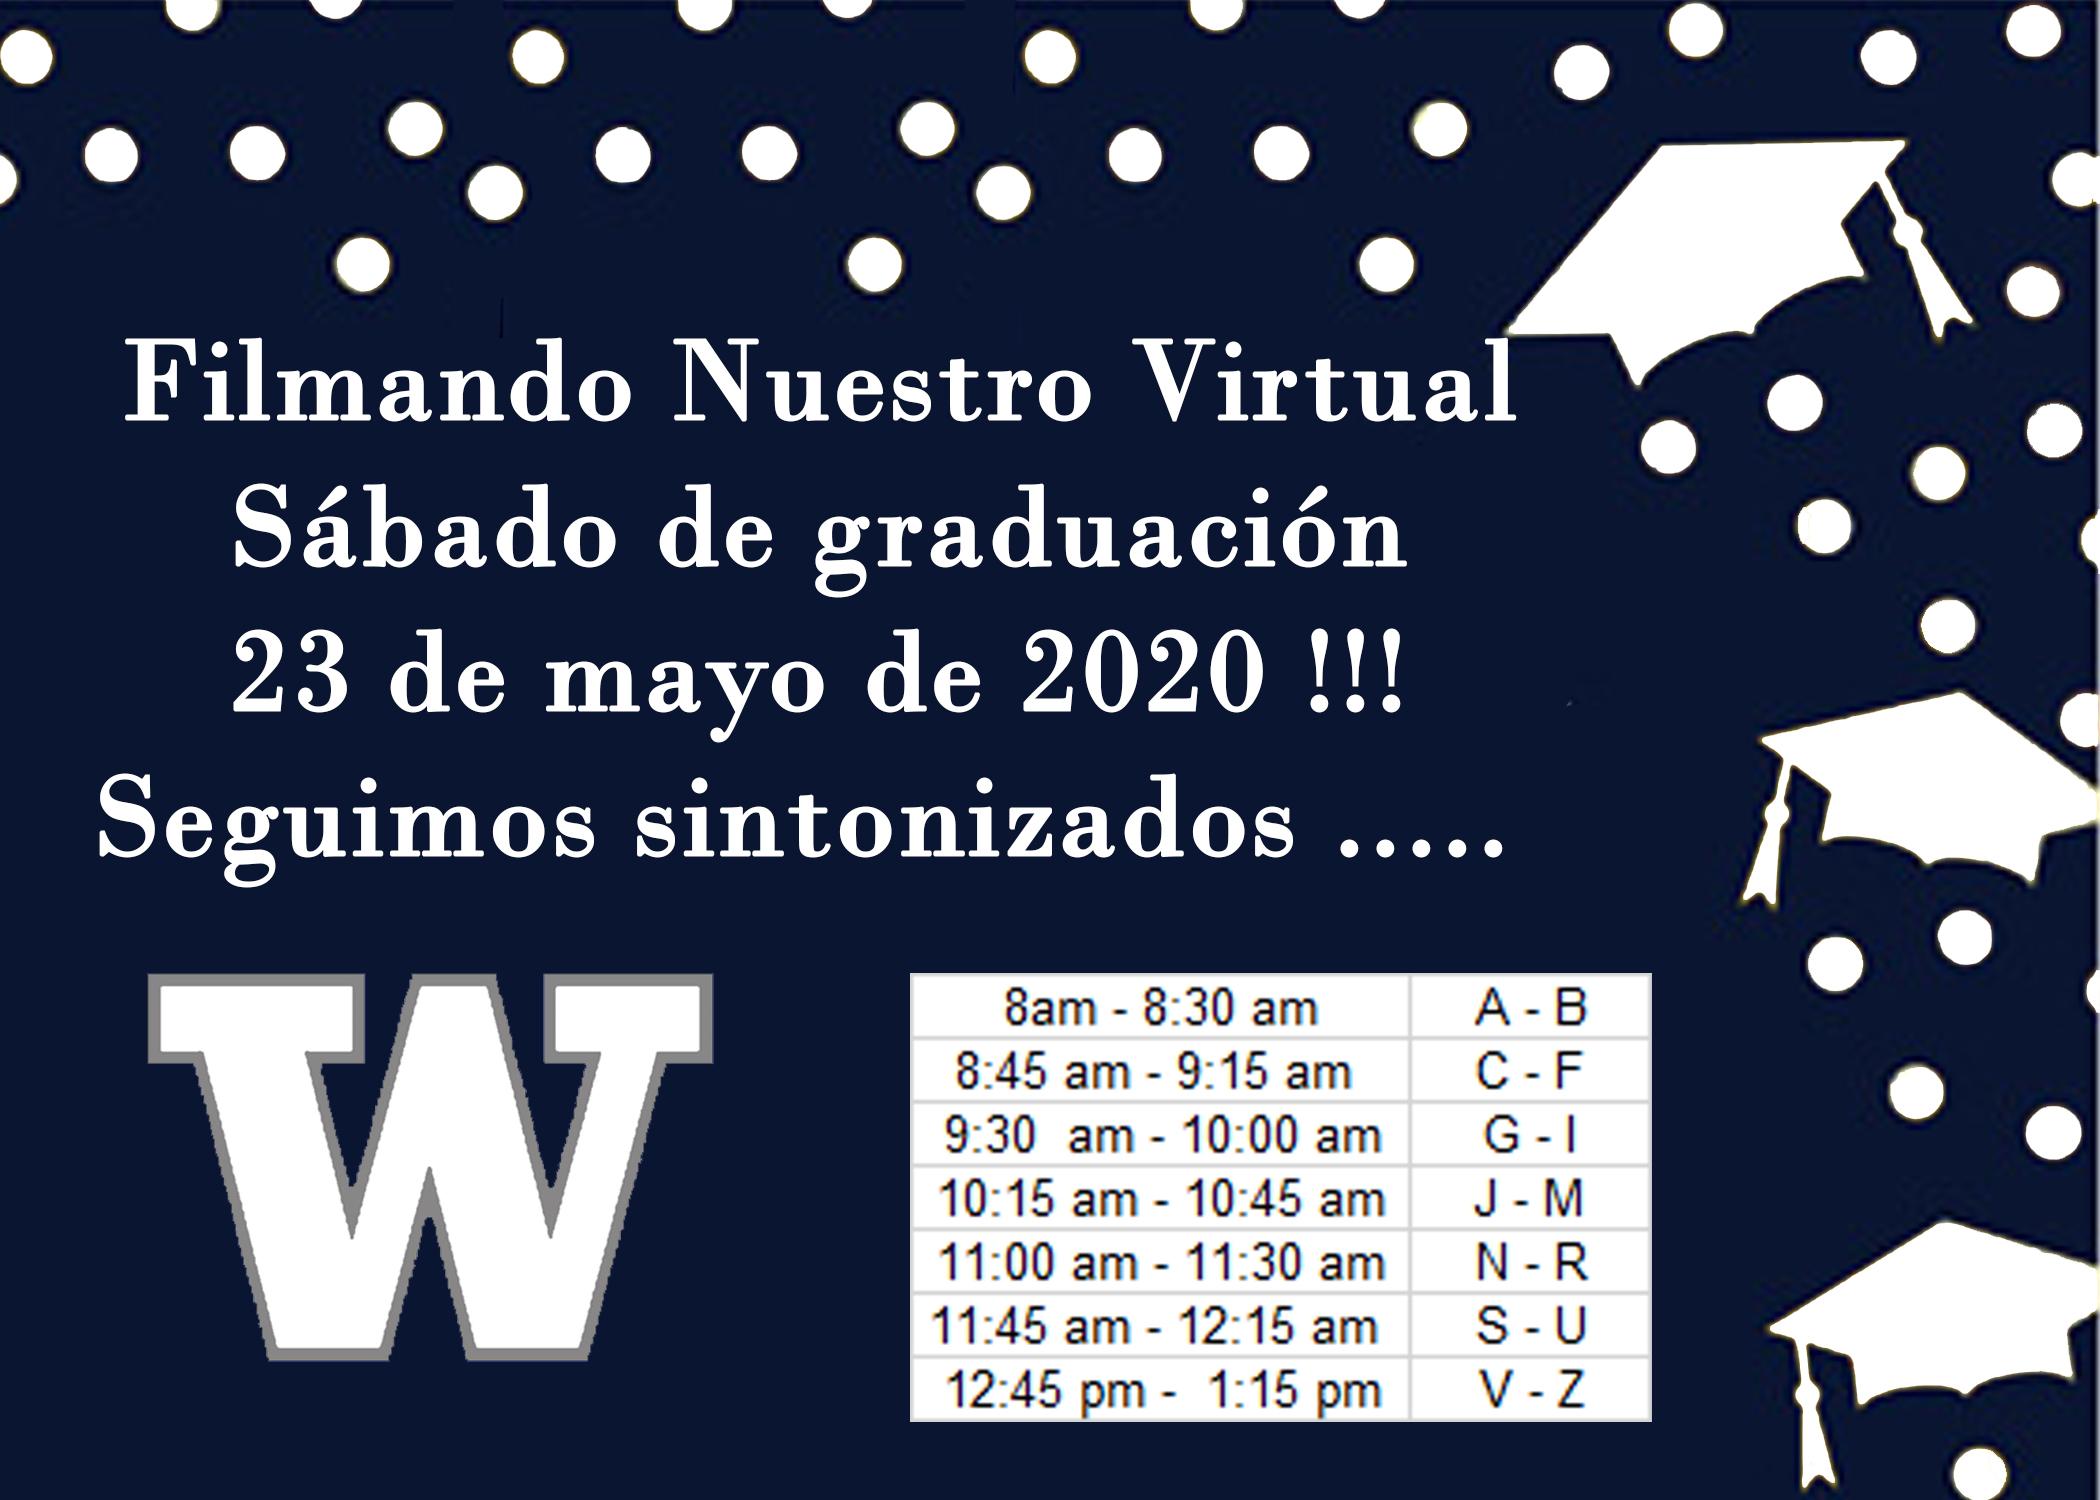 virtual graduation schedule spanish 